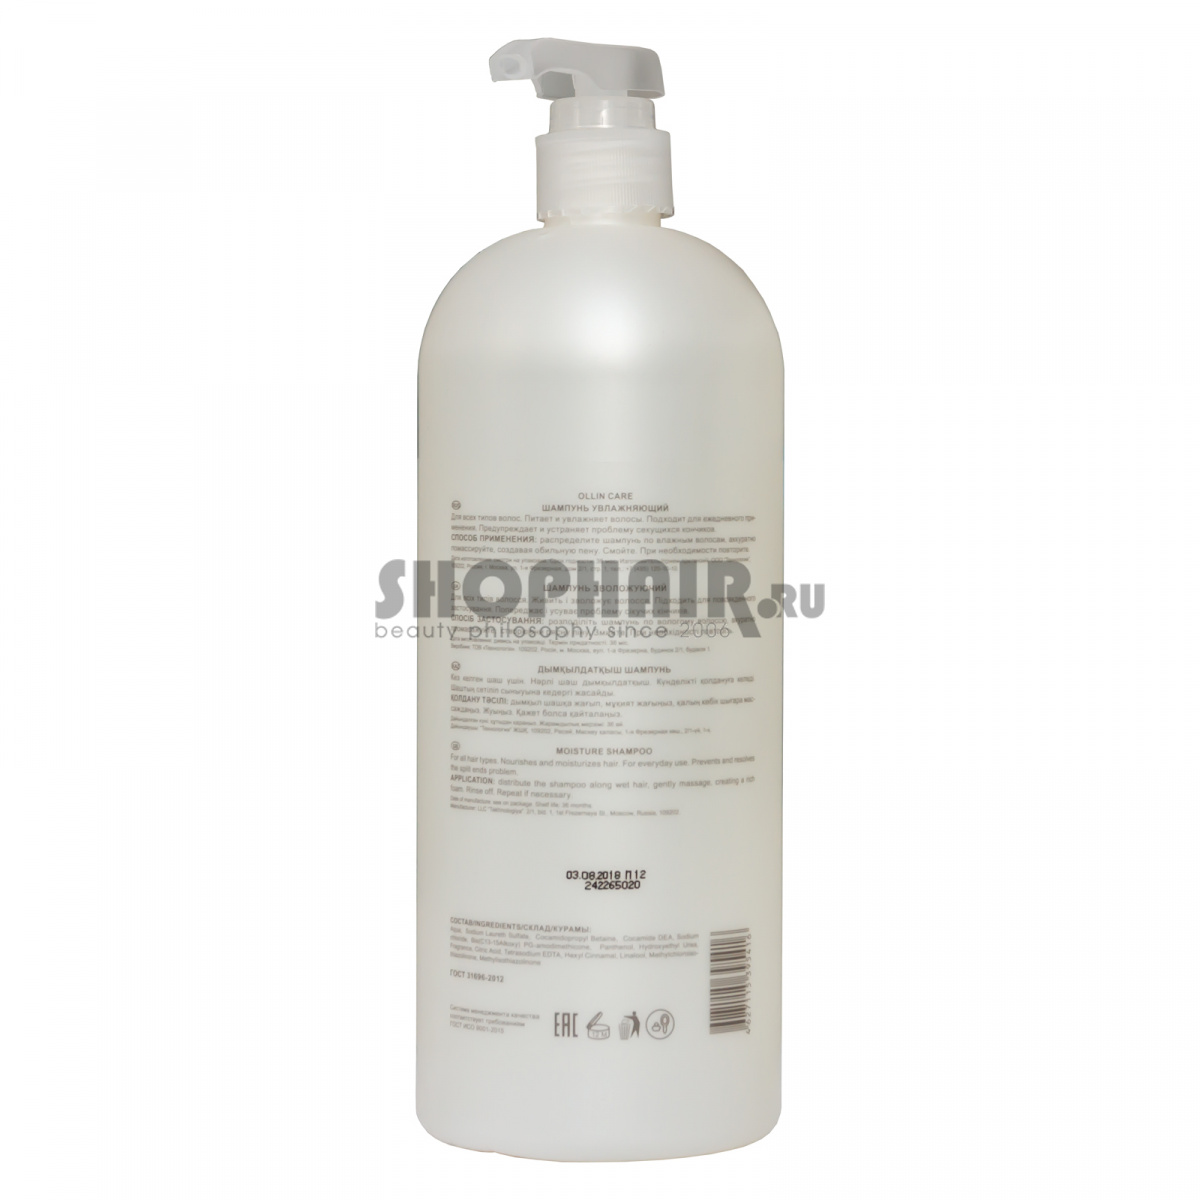 Ollin Professional Care Moisture Shampoo - Шампунь увлажняющий 1000 мл Ollin Professional (Россия) купить по цене 528 руб.